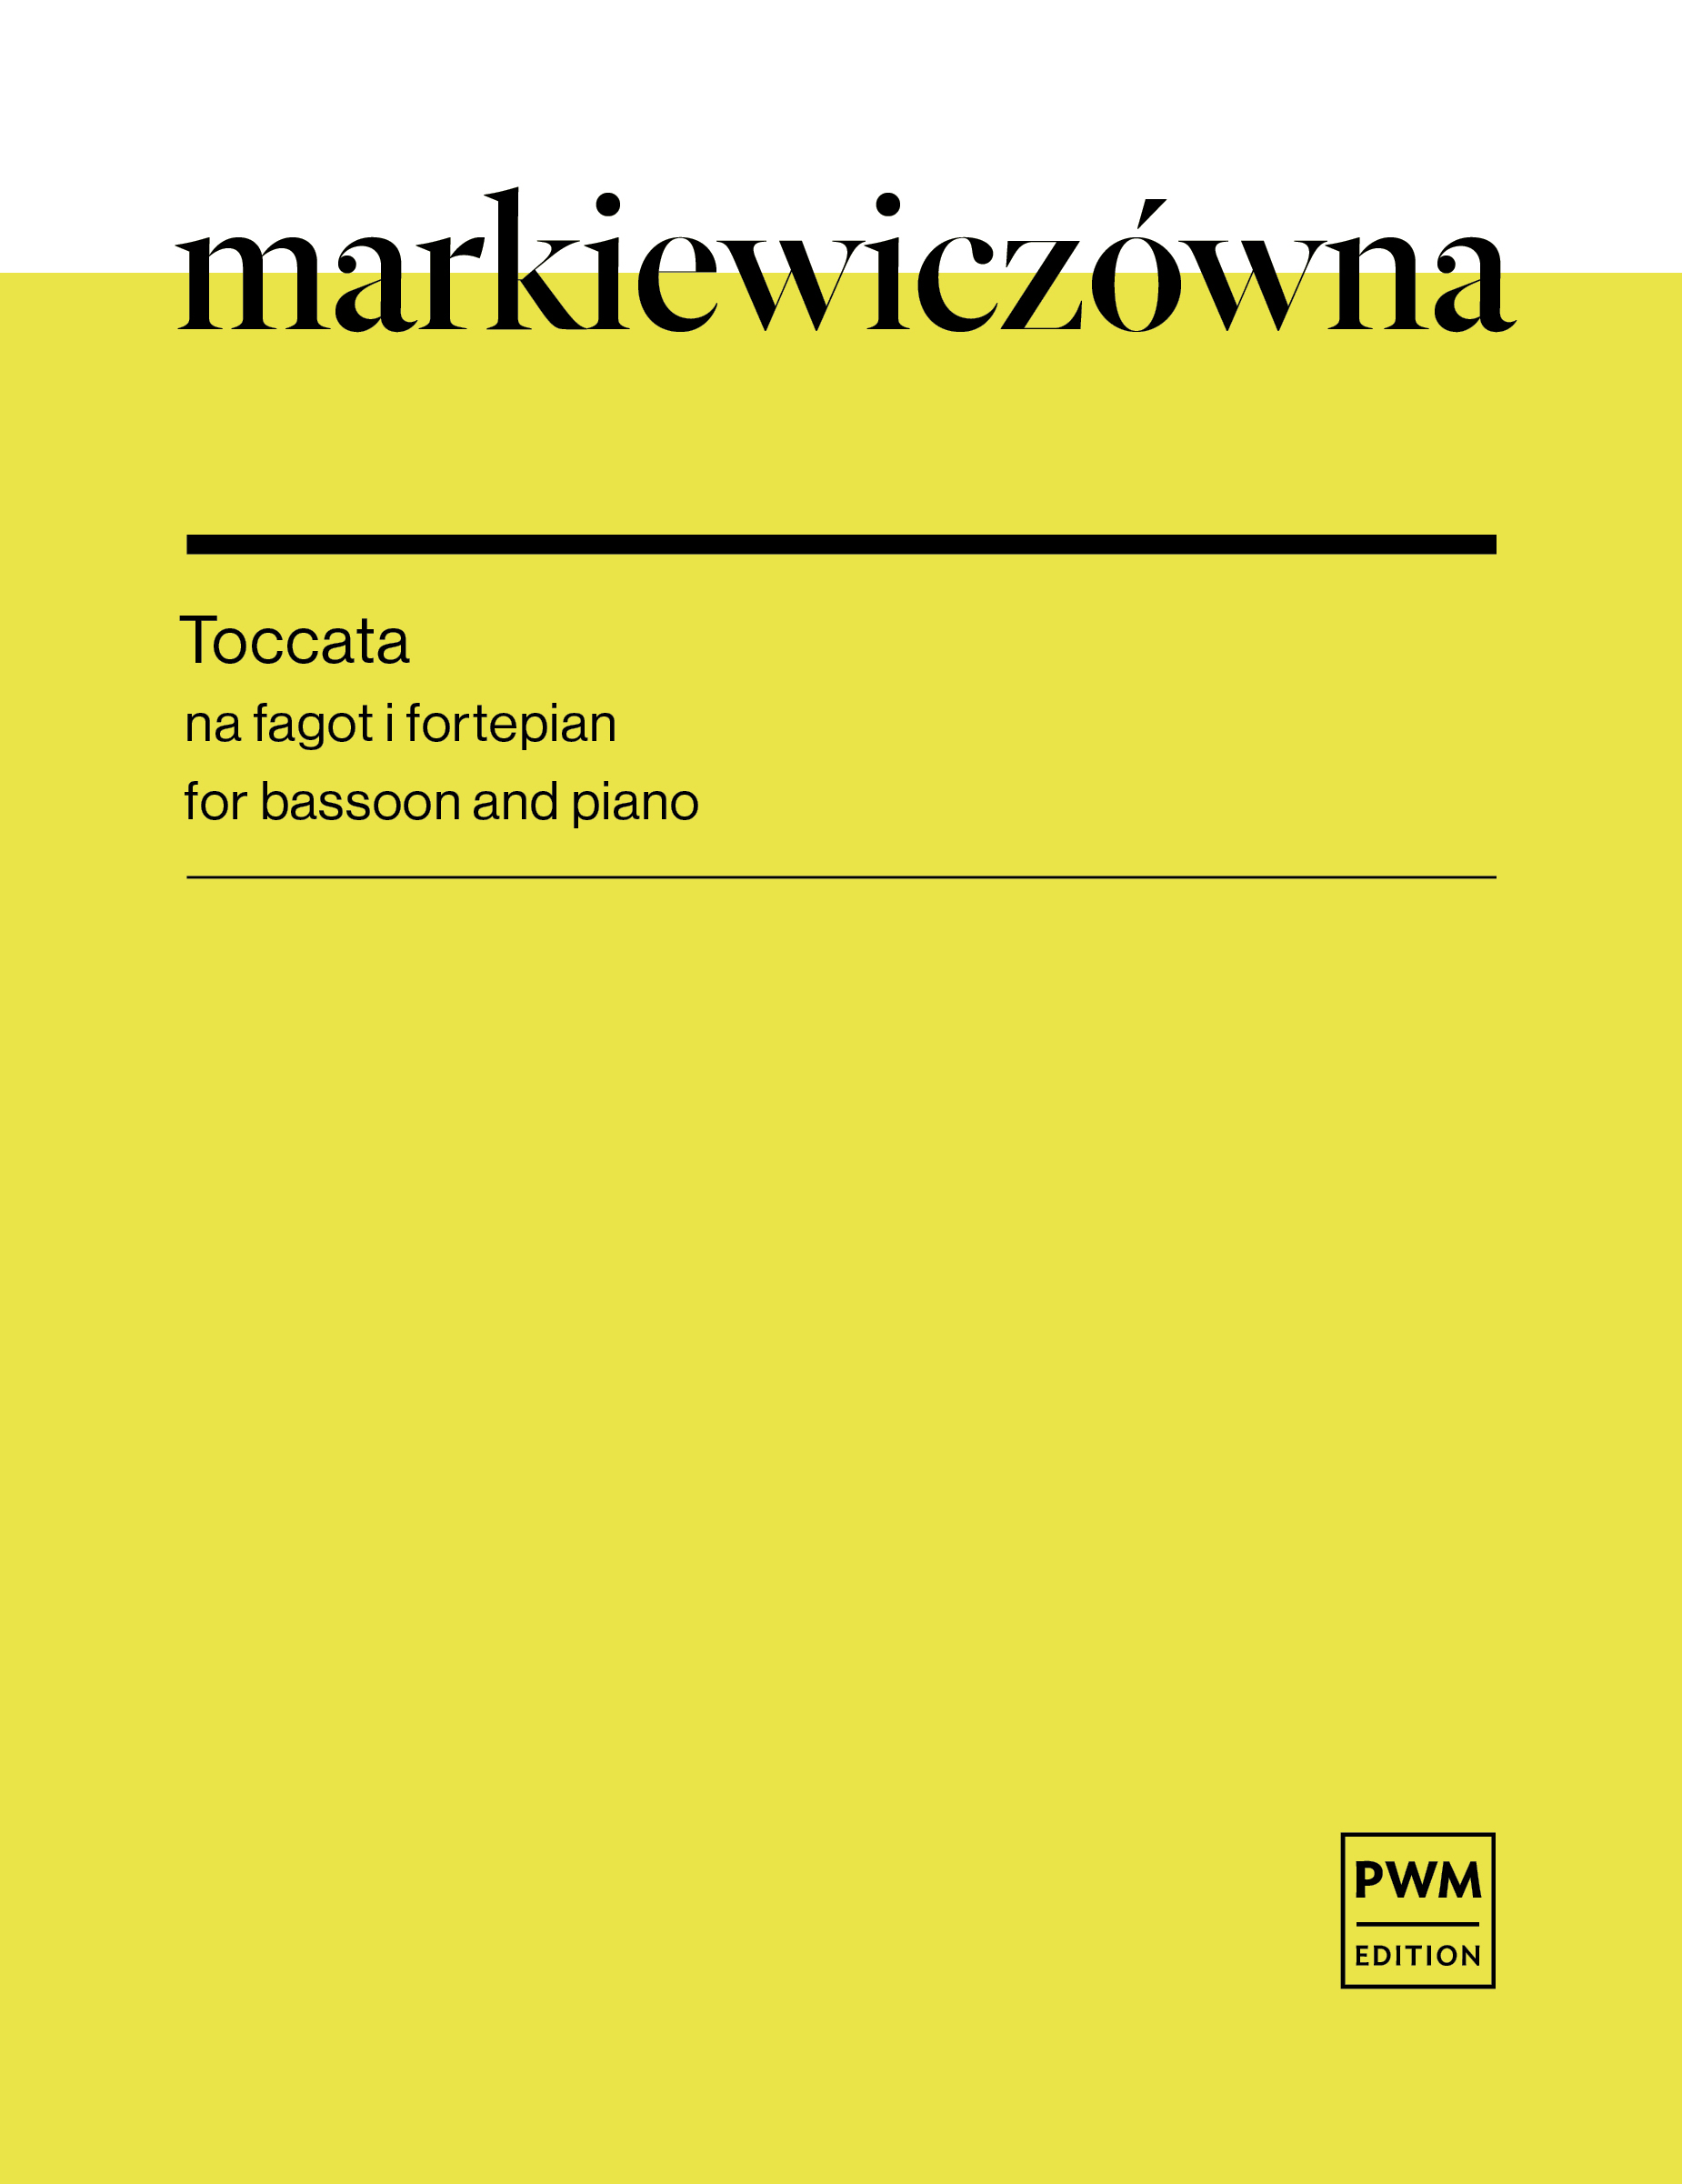 Markiewiczowna Toccata Bassoon & Piano Sheet Music Songbook